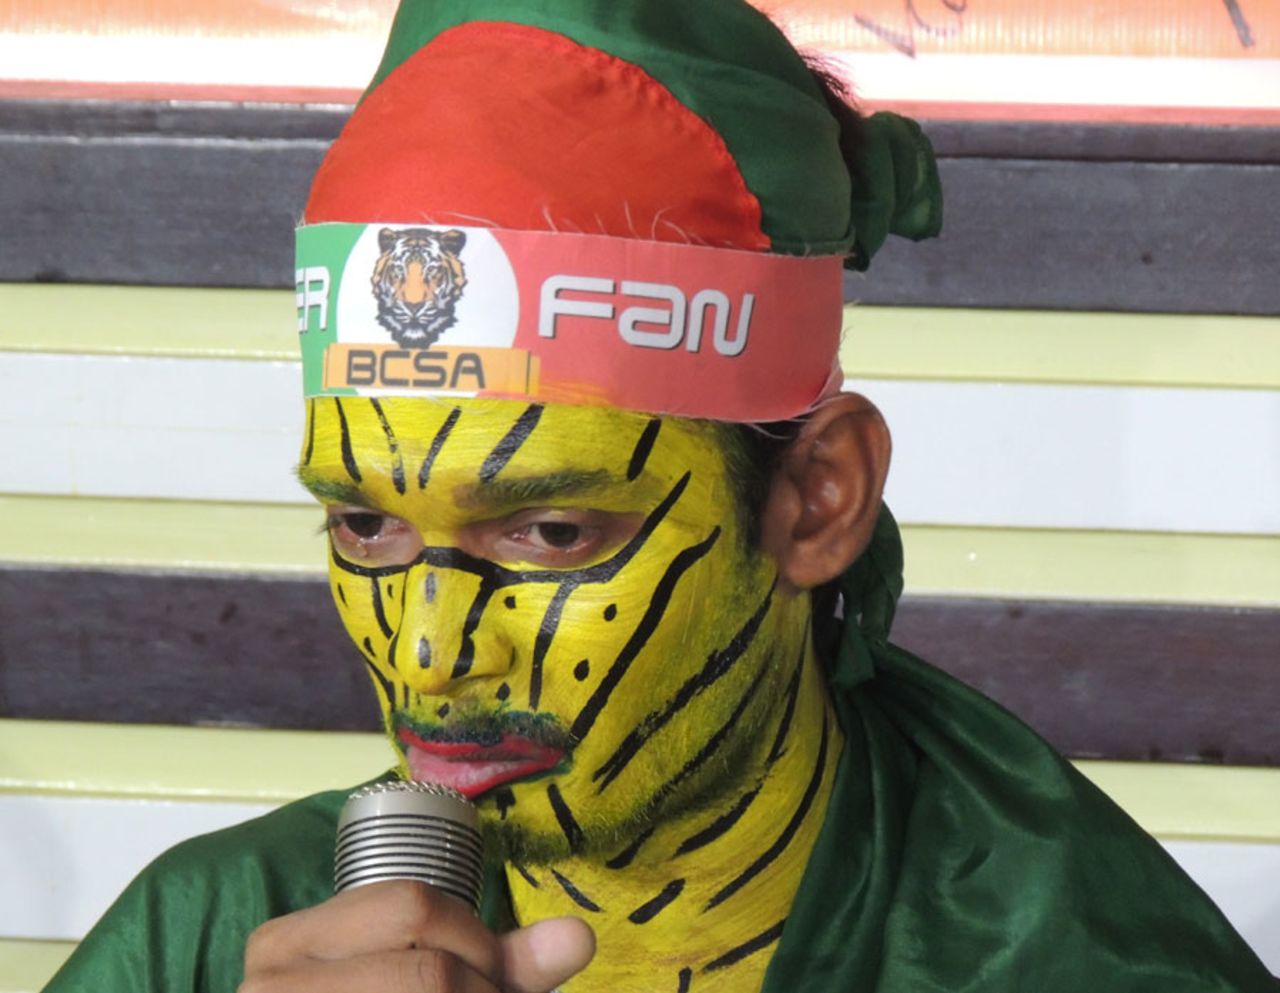 Shoaib Ali, the Bangladesh fan, appeals for financial support, Dhaka, January 17, 2015